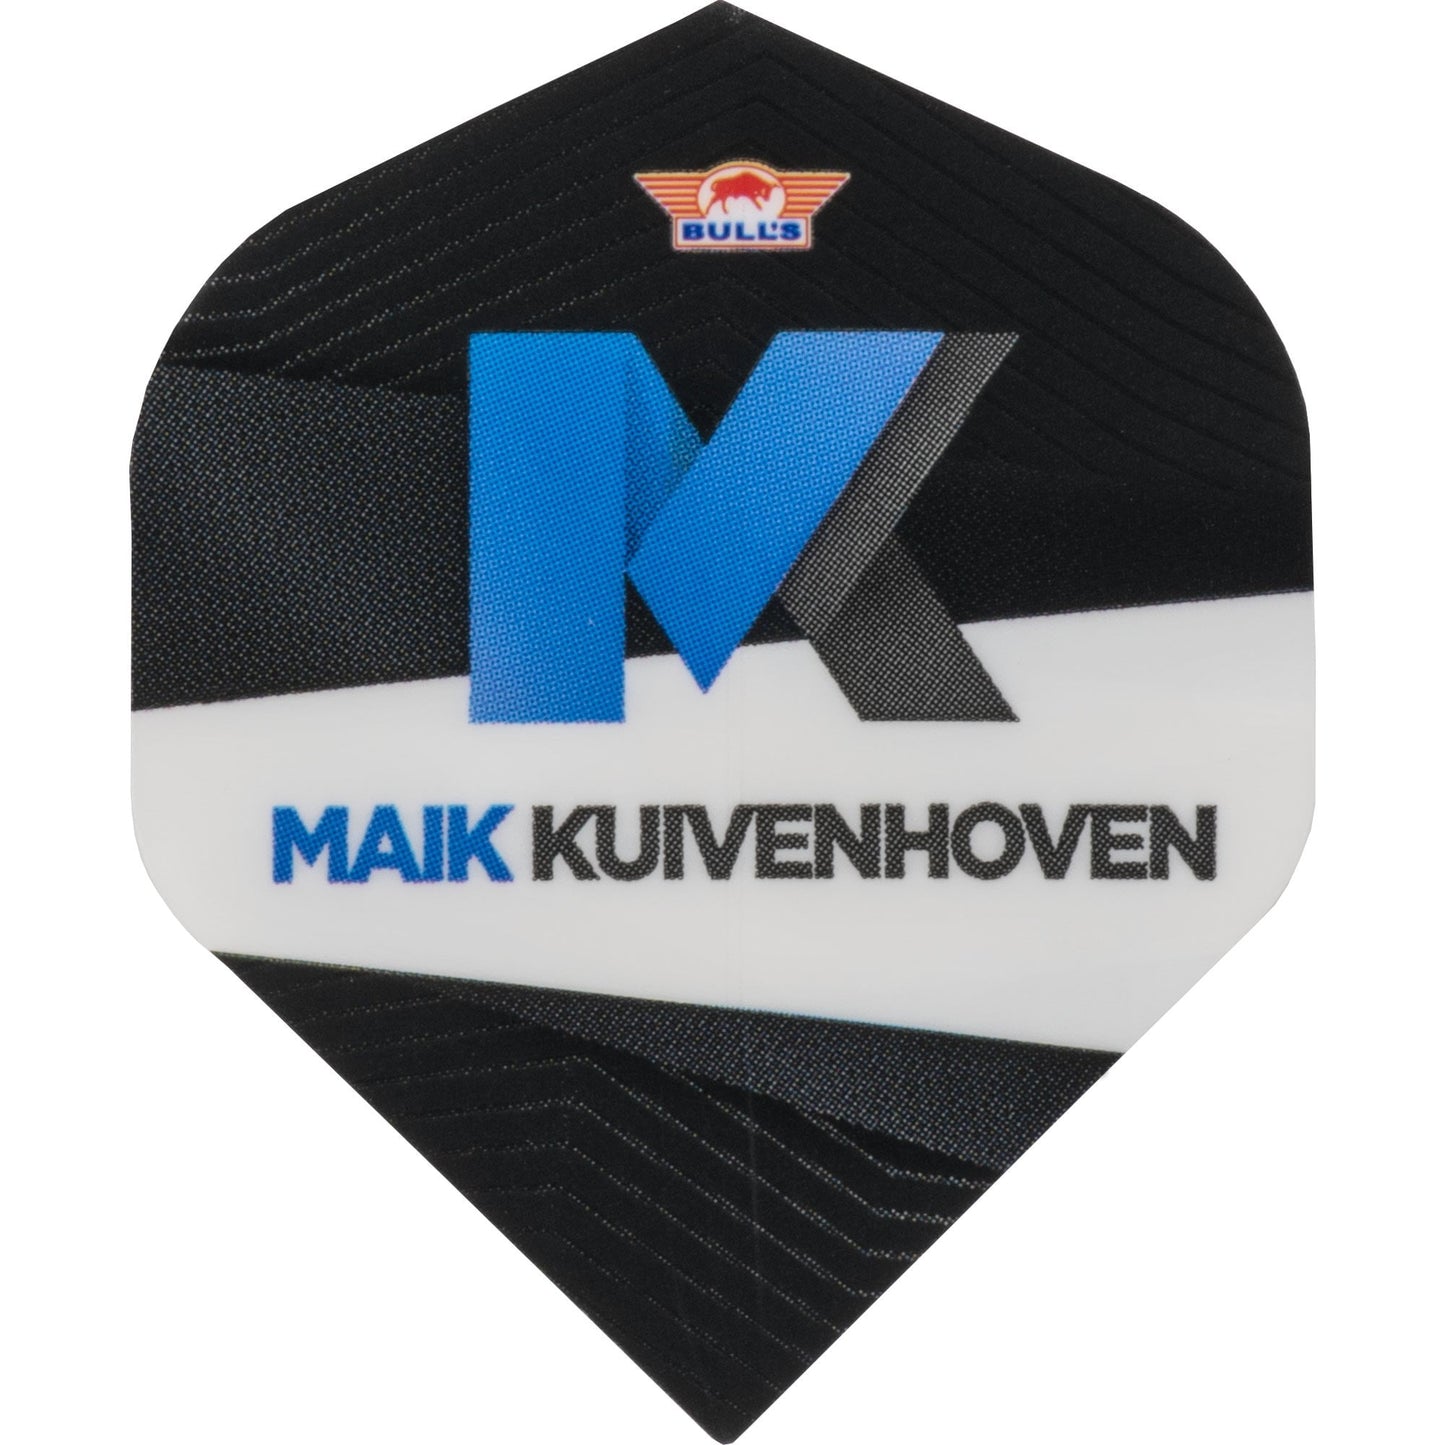 Bulls Maik Kuivenhoven Dart Flights - 100 - No2 - Std - MK